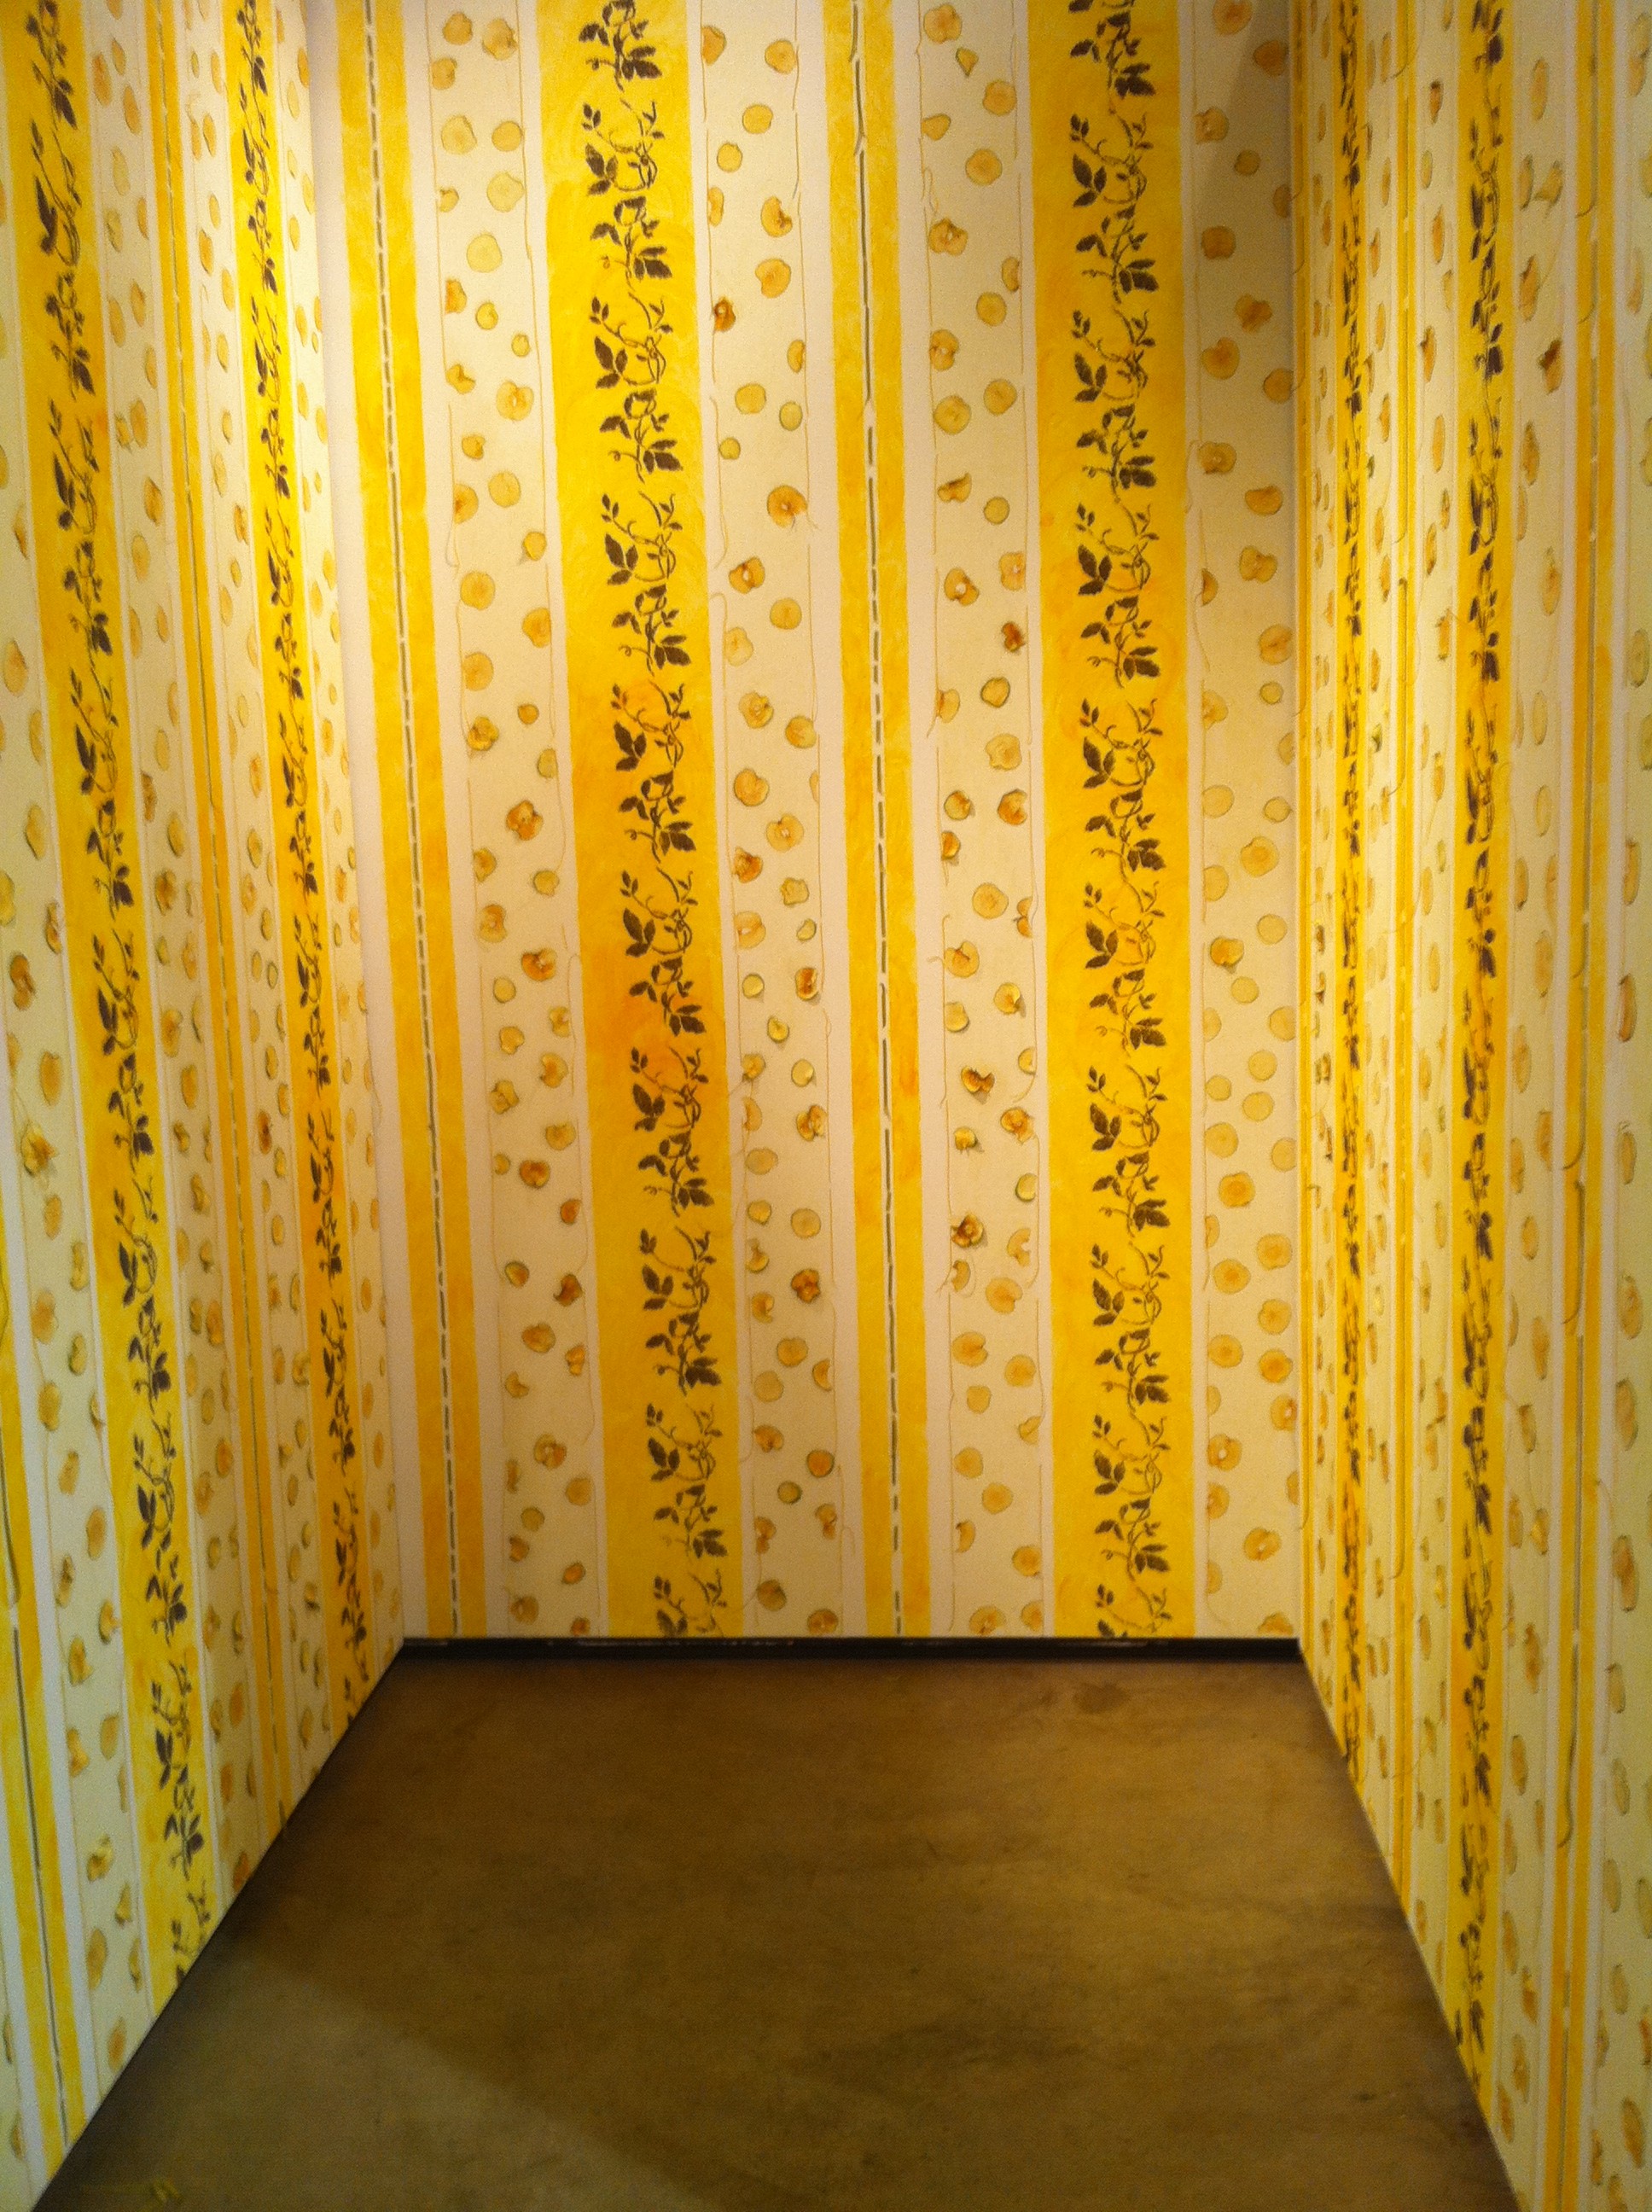 Literary analysis essay on the yellow wallpaper